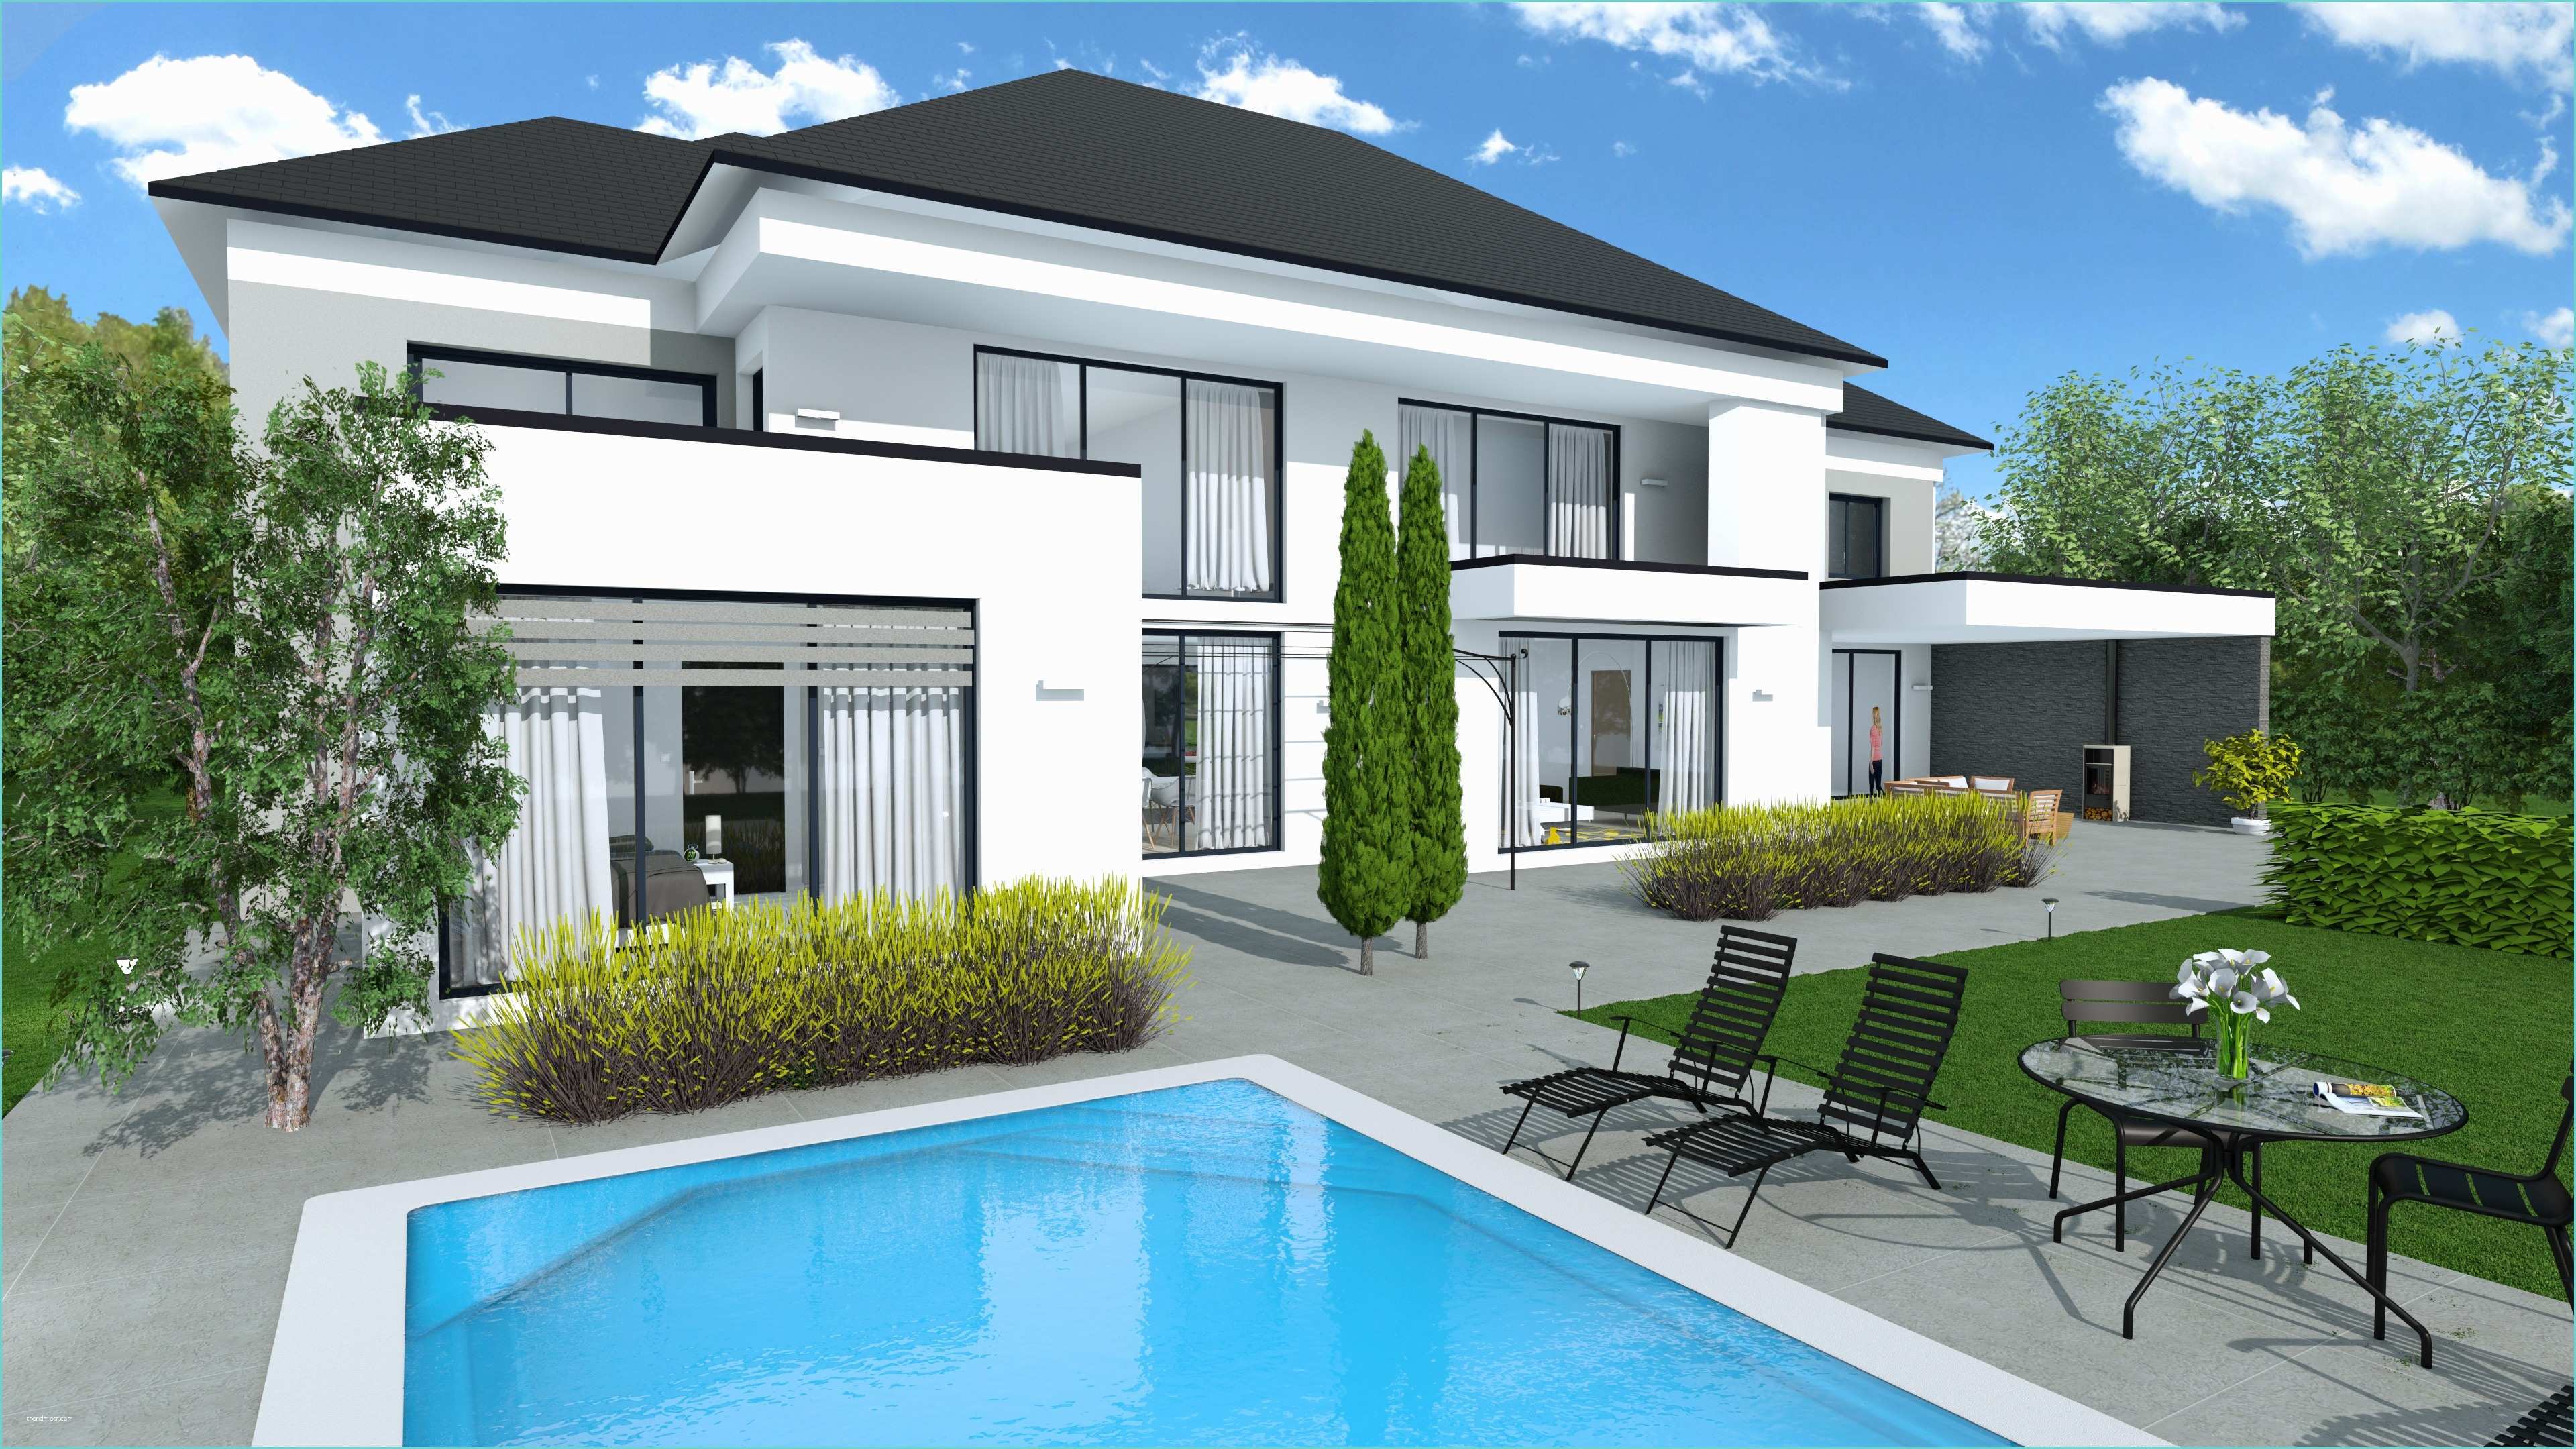 Cedreo Home Planner Crack Garden Planner Design & Remodel Exteriors In 3d with